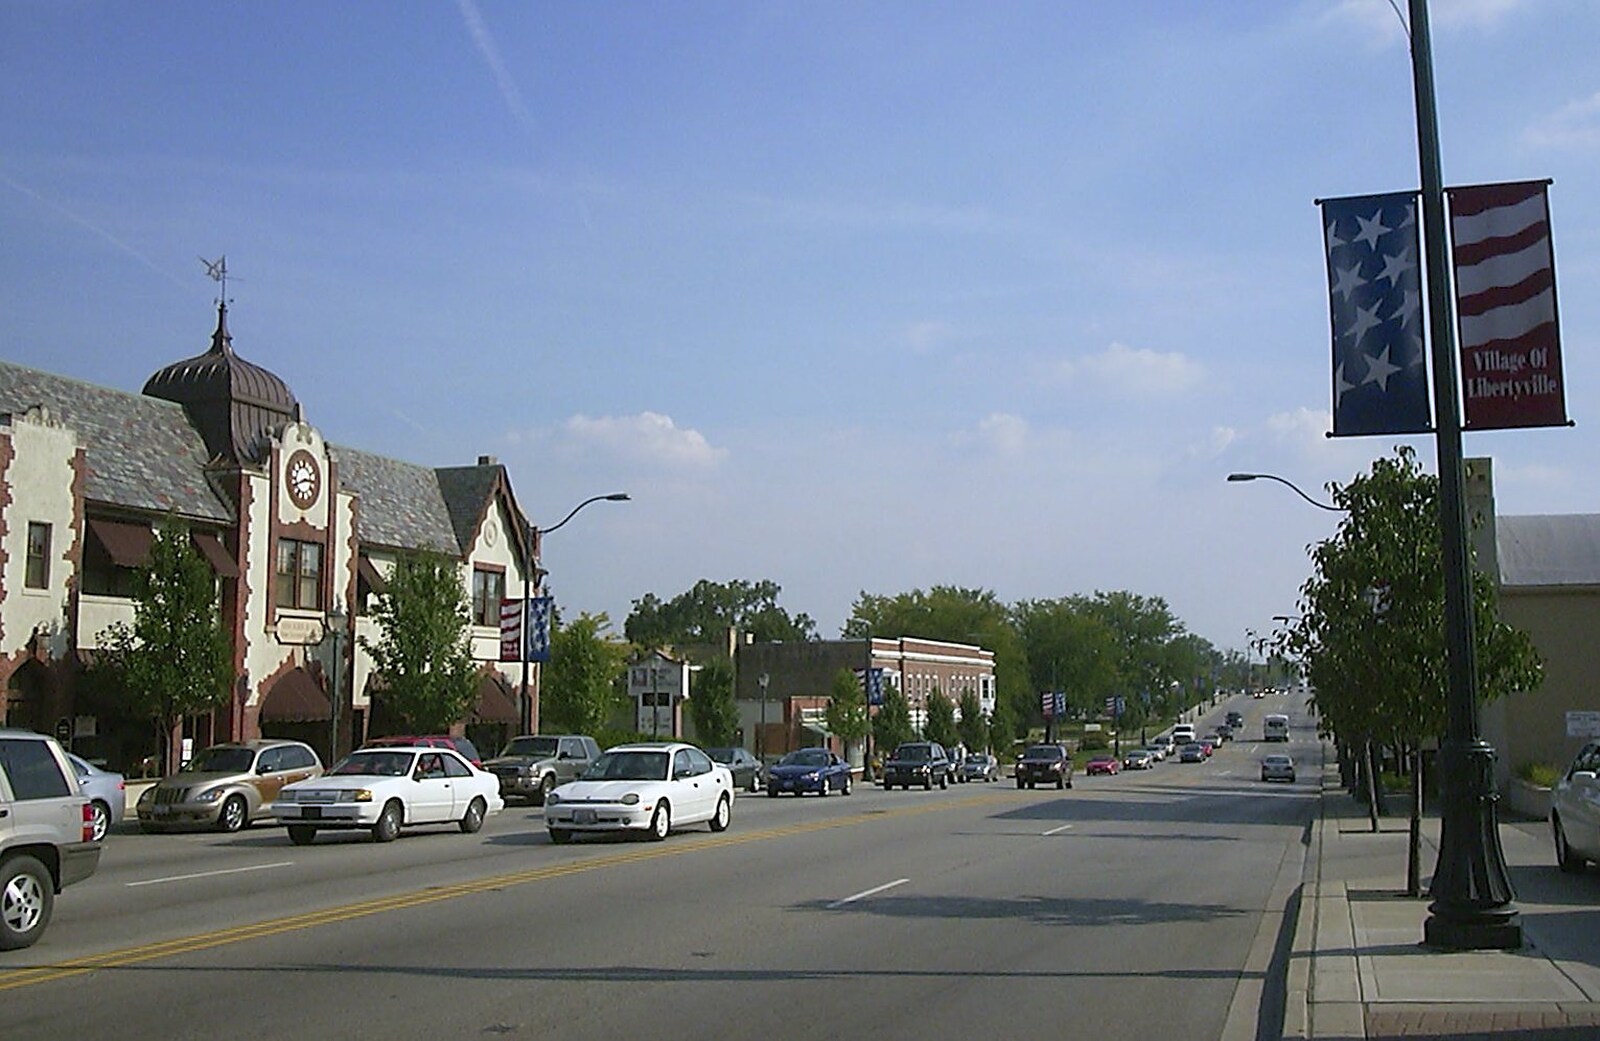 Libertyville Main Street from A Trip to Libertyville, Illinois, USA - 31st August 2004